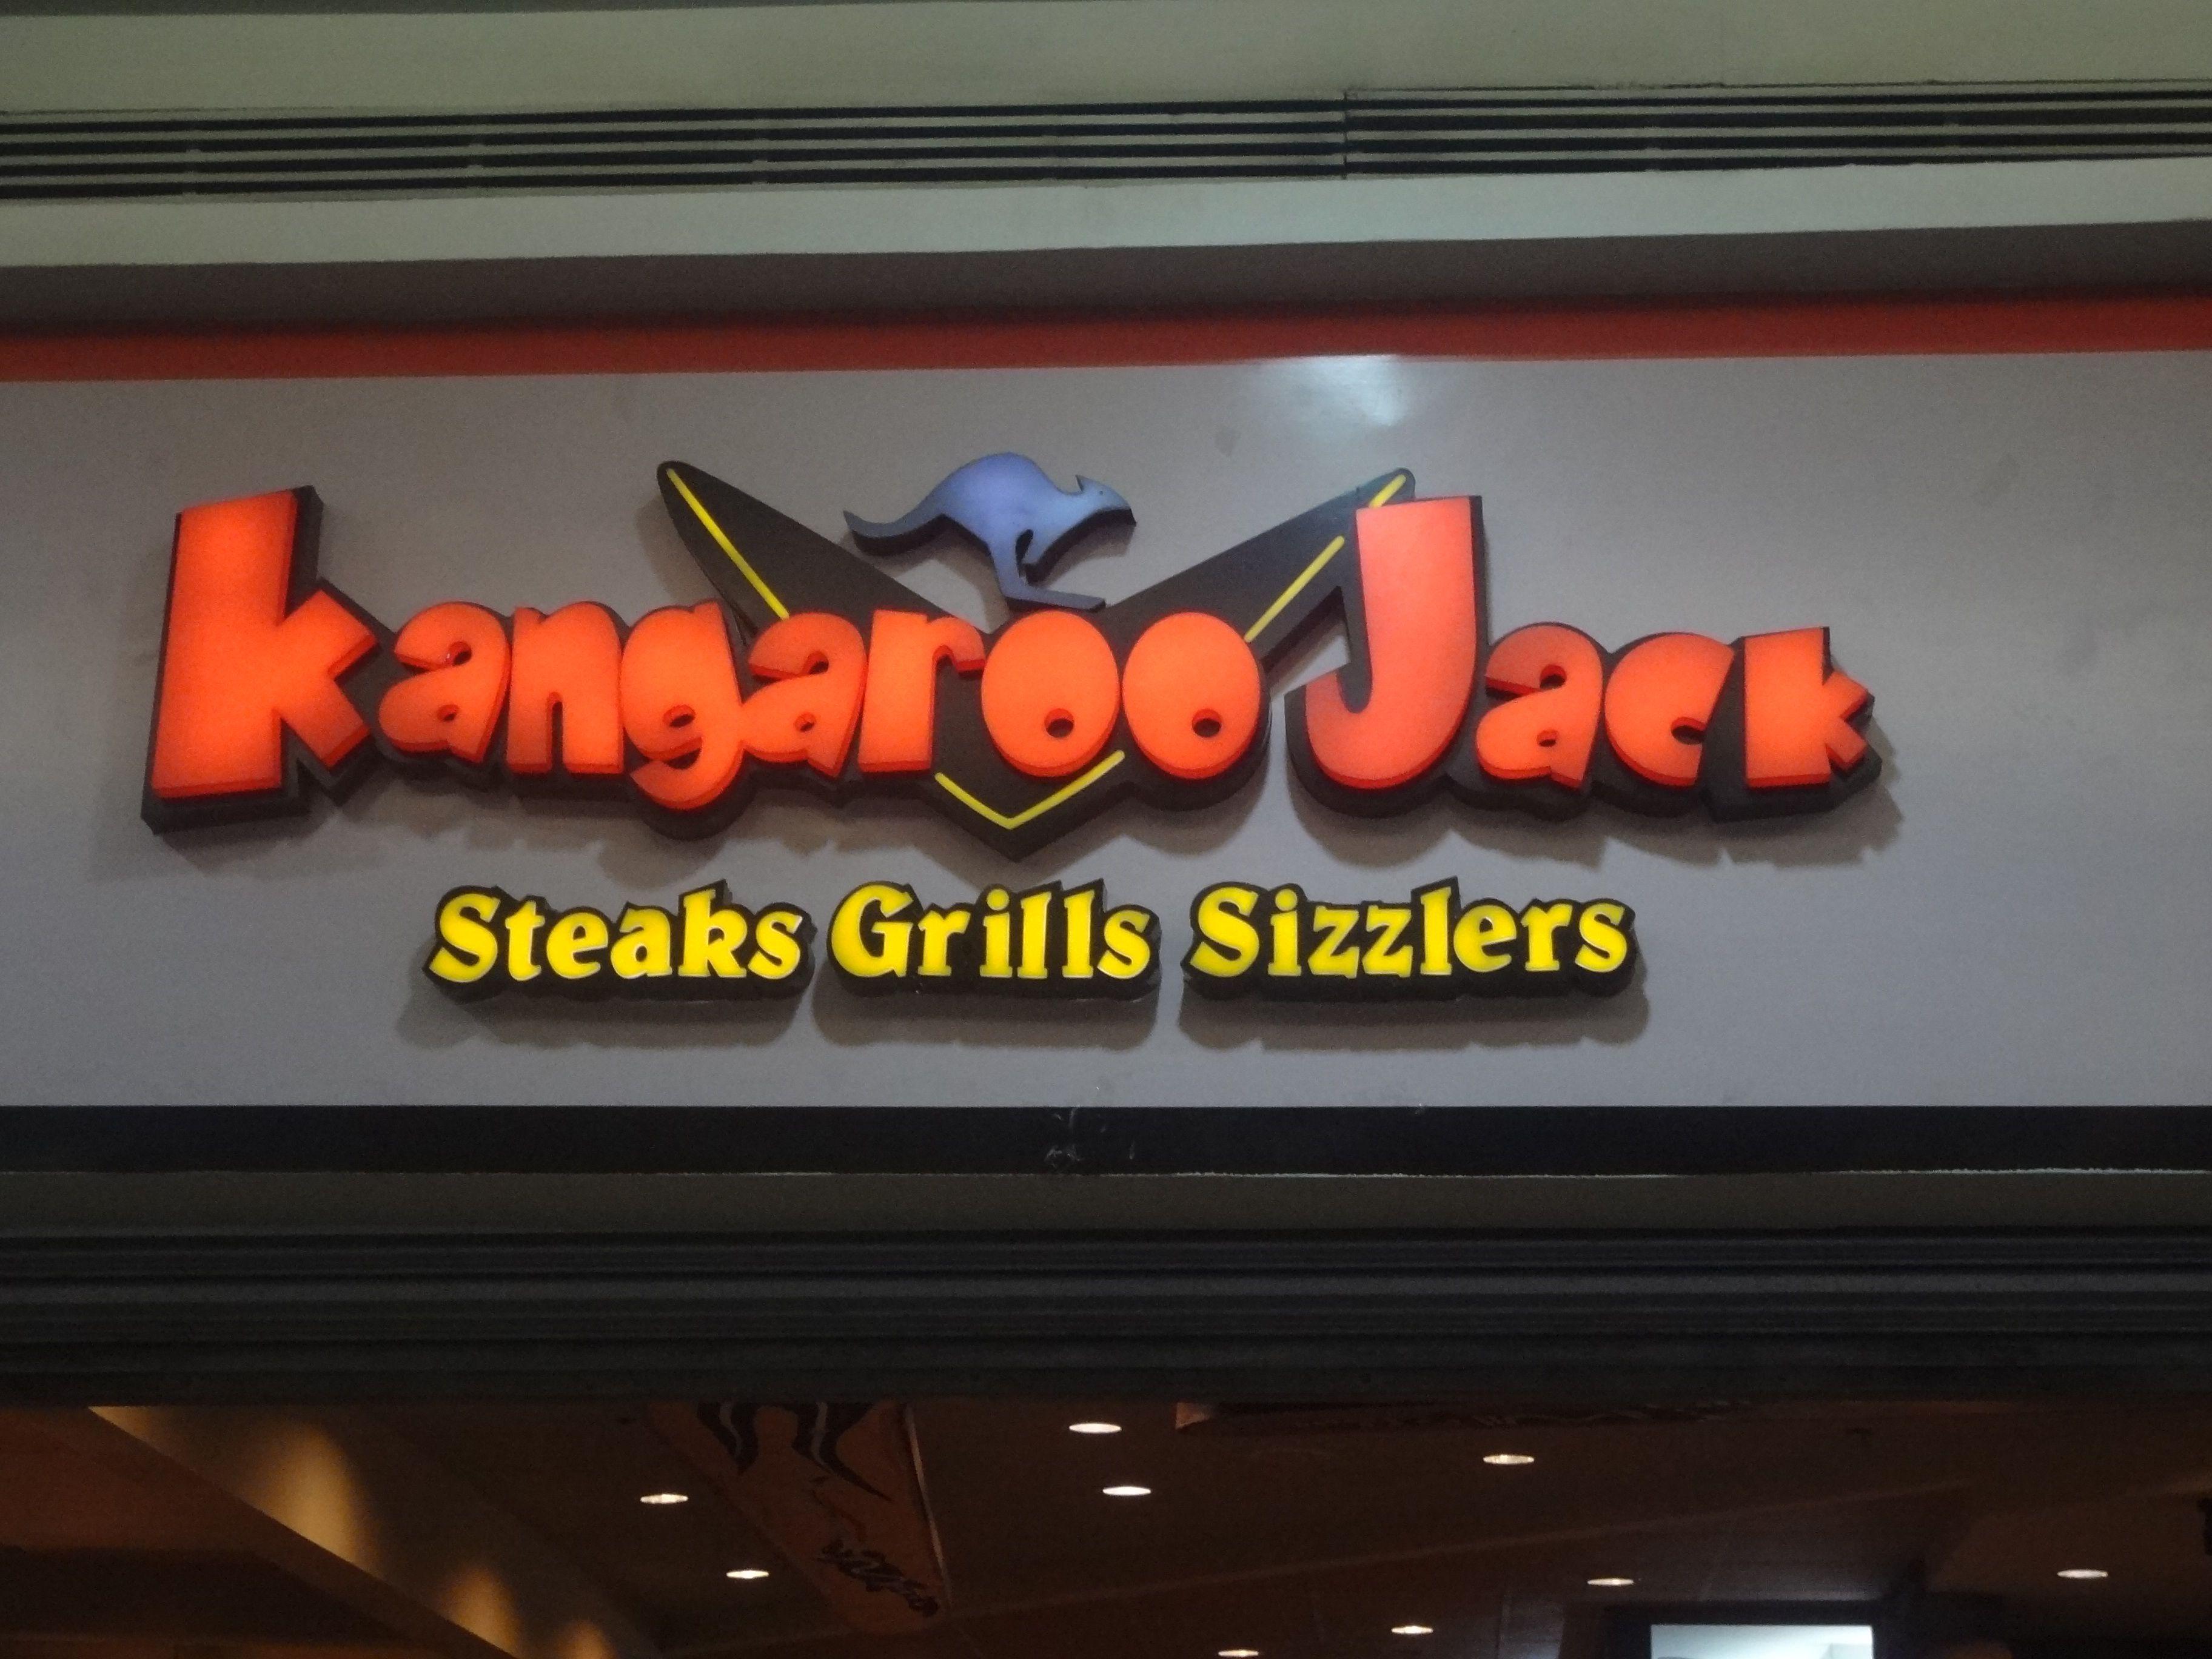 Kangaroo Restaurant Logo - Kangaroo Jack, SM City Manila